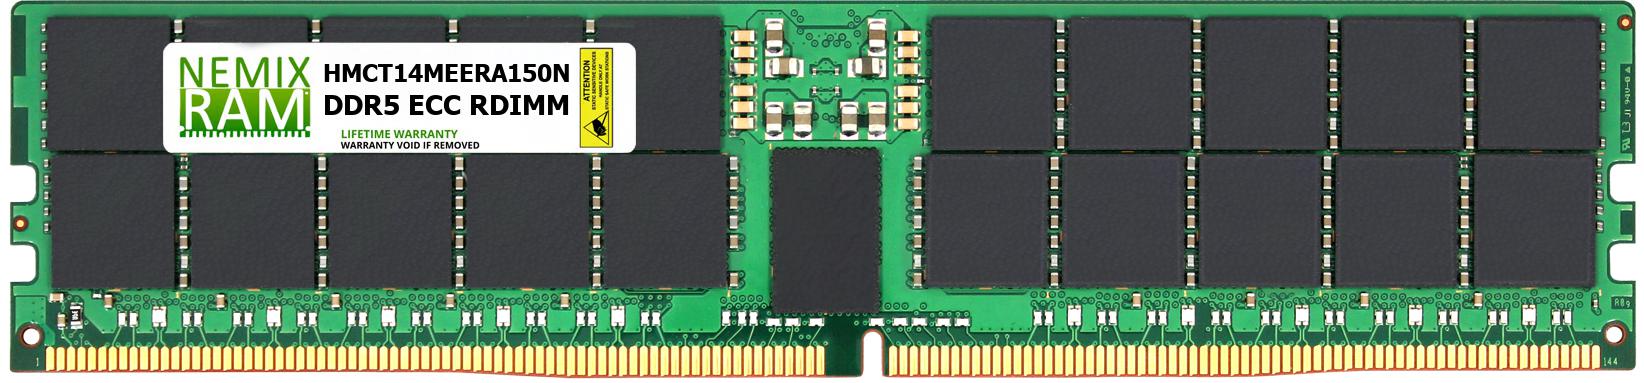 NEMIX RAM 256GB DDR5 4800MHz PC5-38400 ECC RDIMM Compatible with Hynix HMCT14MEERA150N